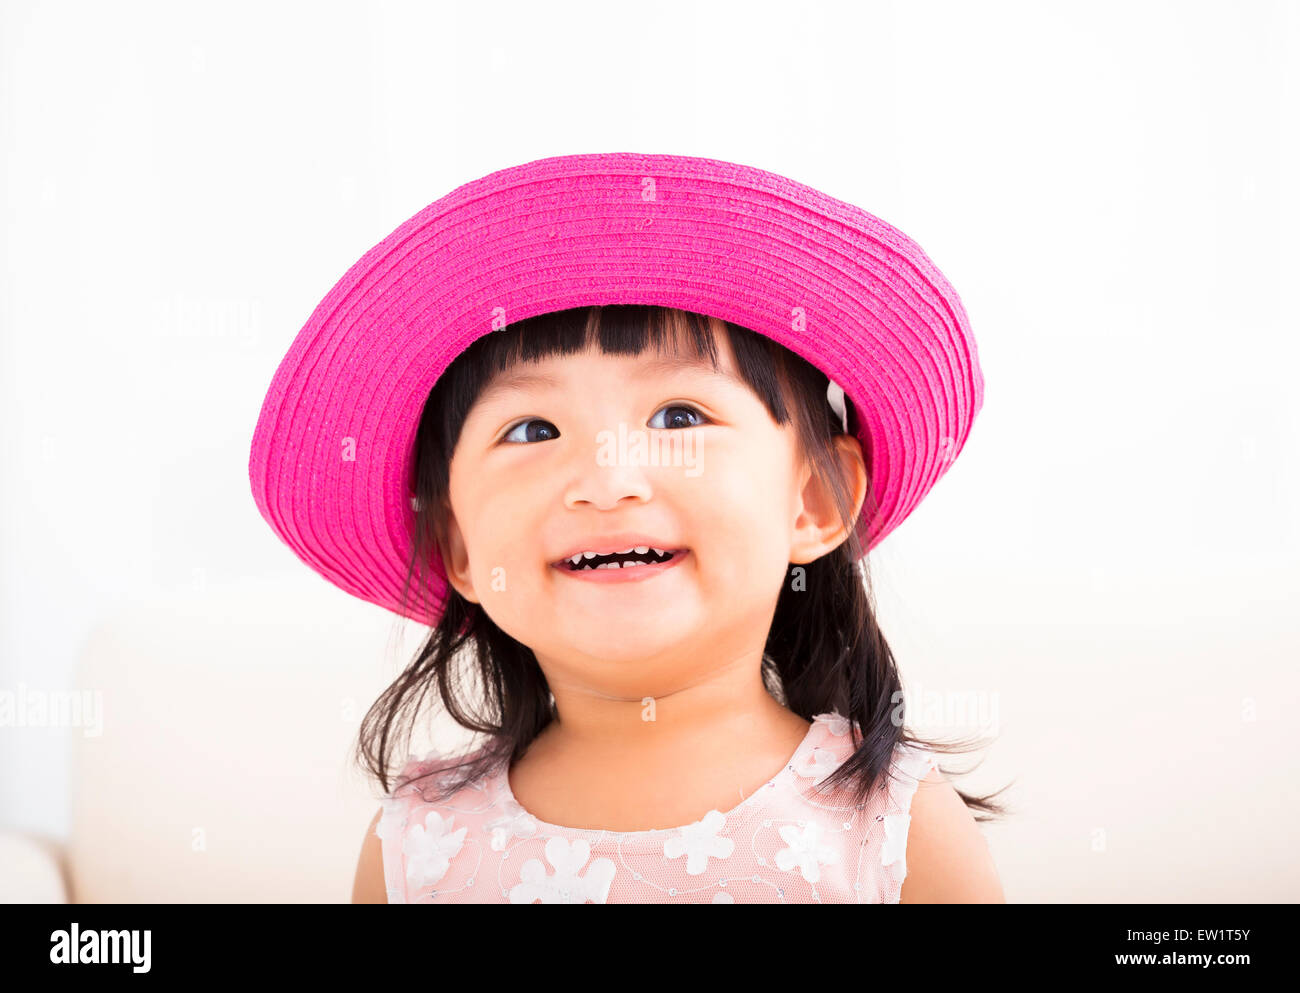 https://c8.alamy.com/comp/EW1T5Y/closeup-sweet-asian-little-girl-face-EW1T5Y.jpg